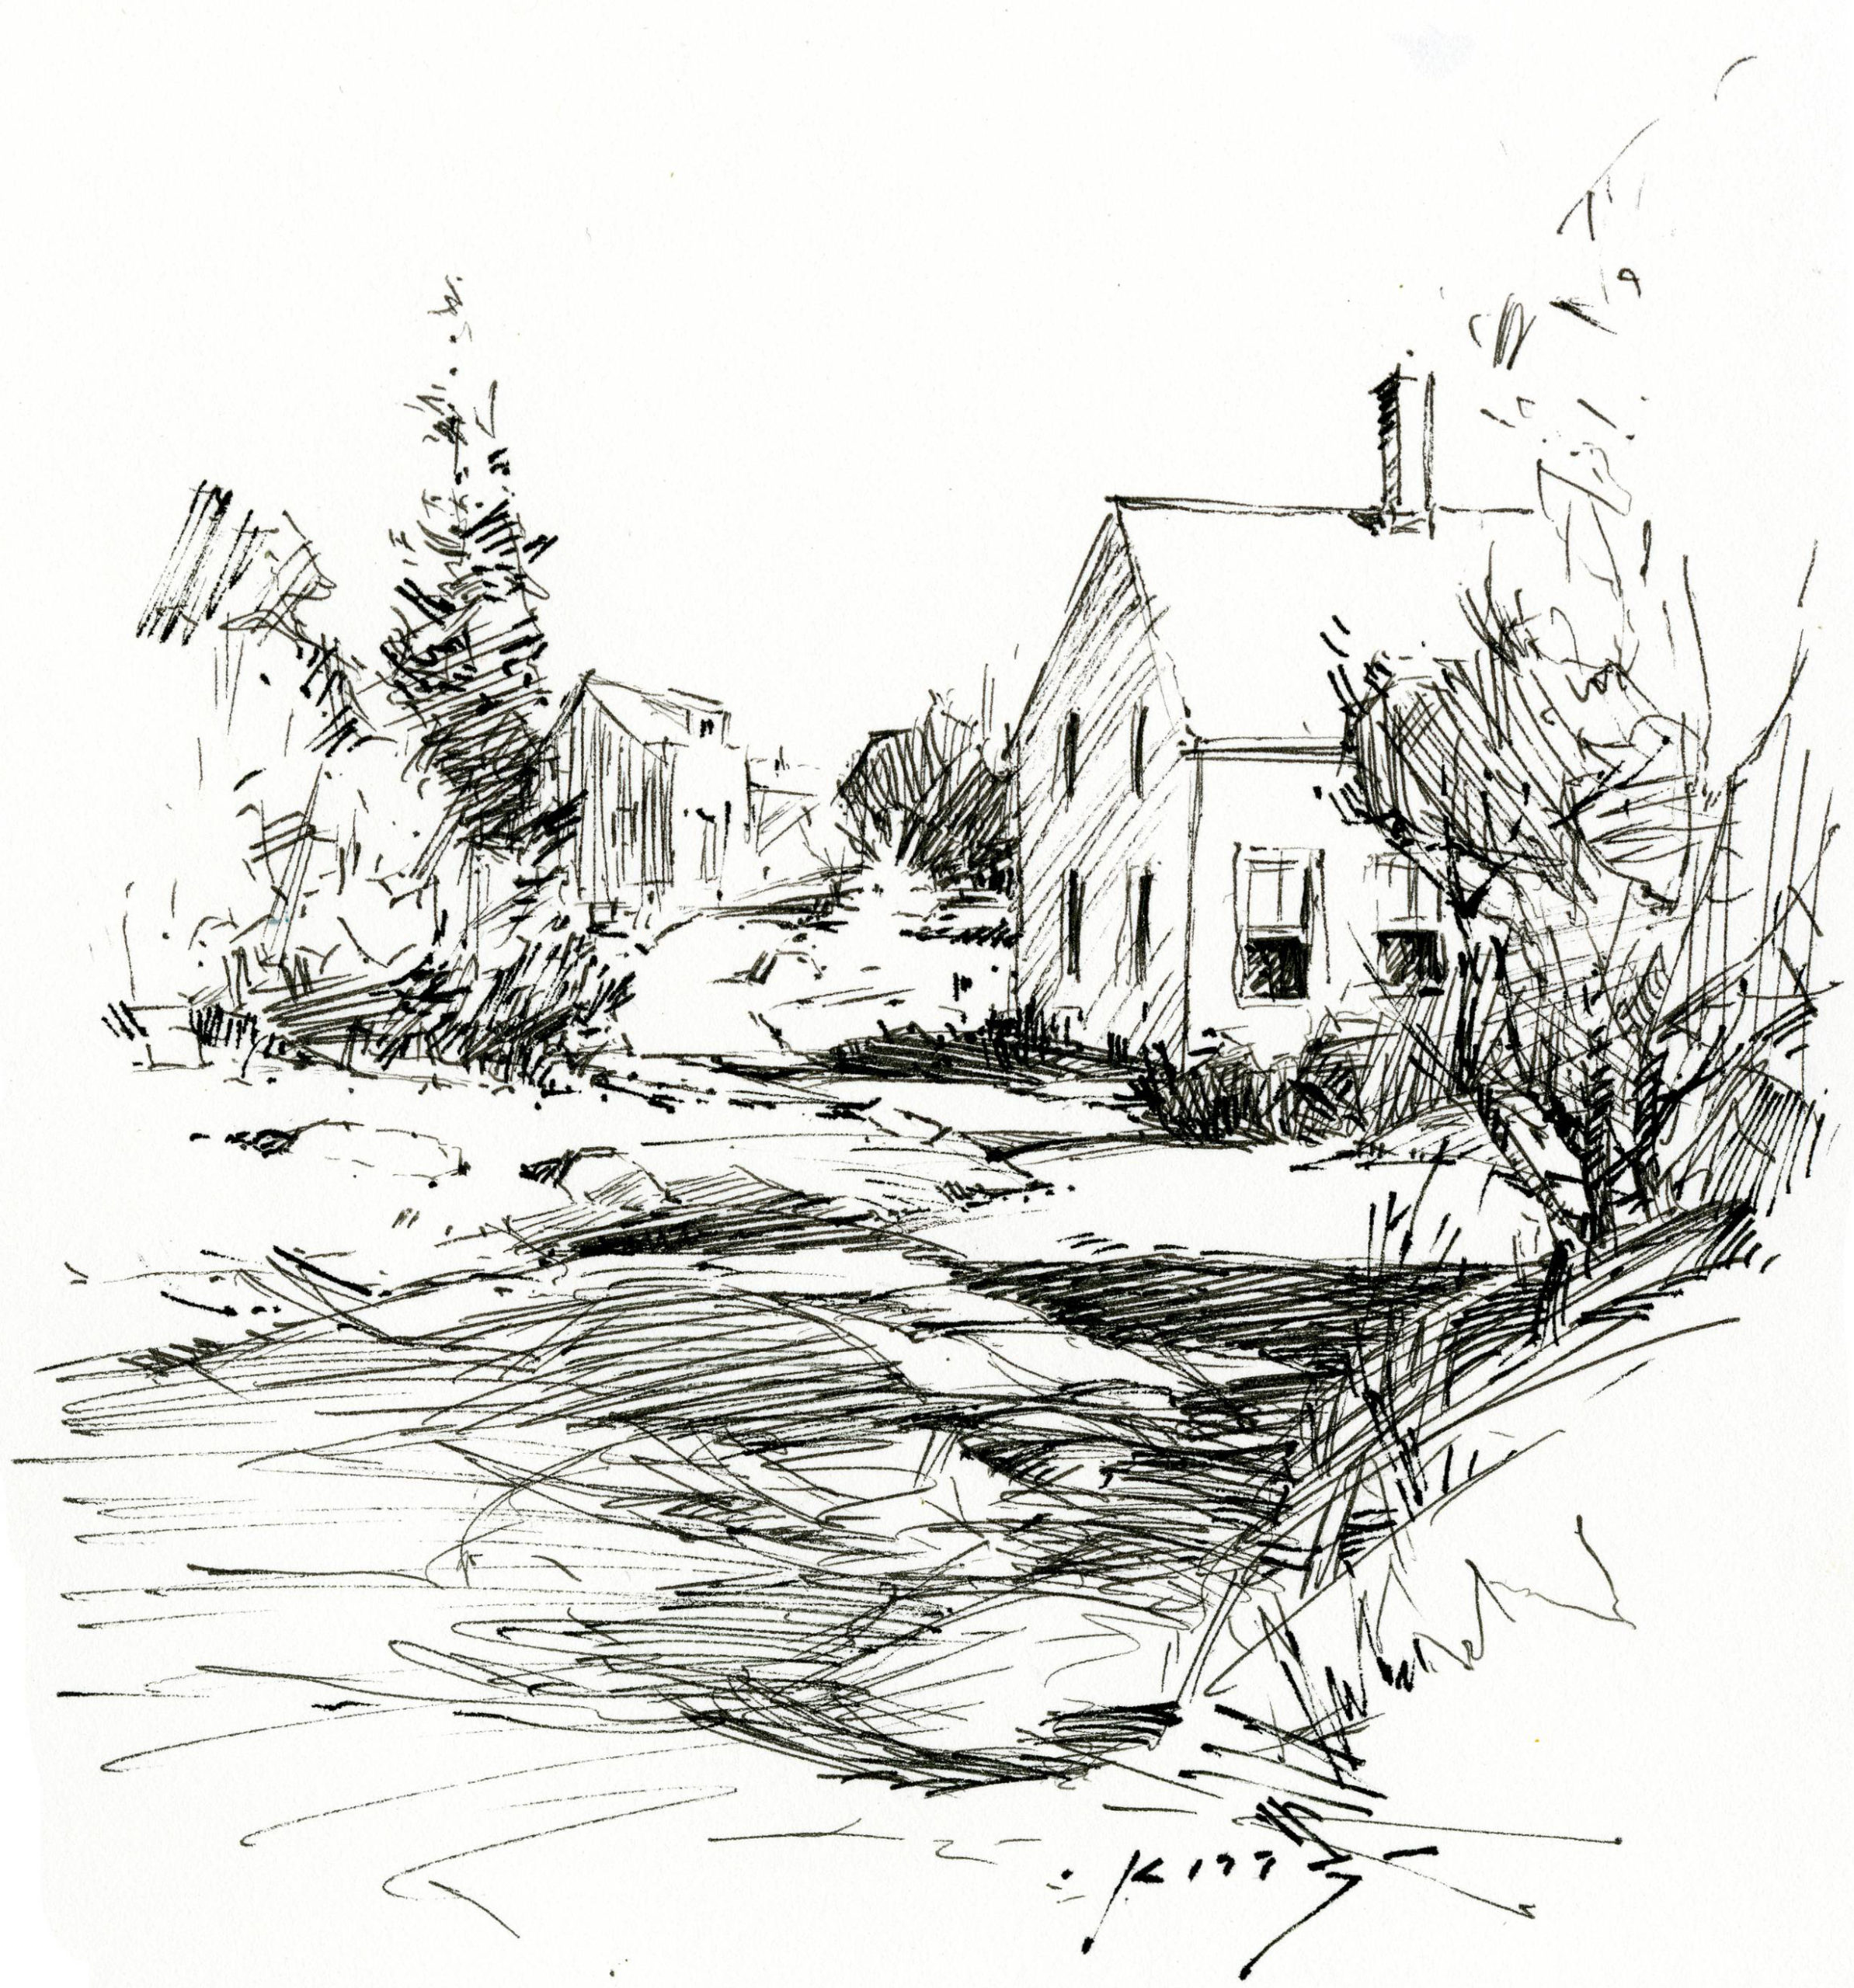 Thomas Jefferson Kitts, "Main Street," ink vignette